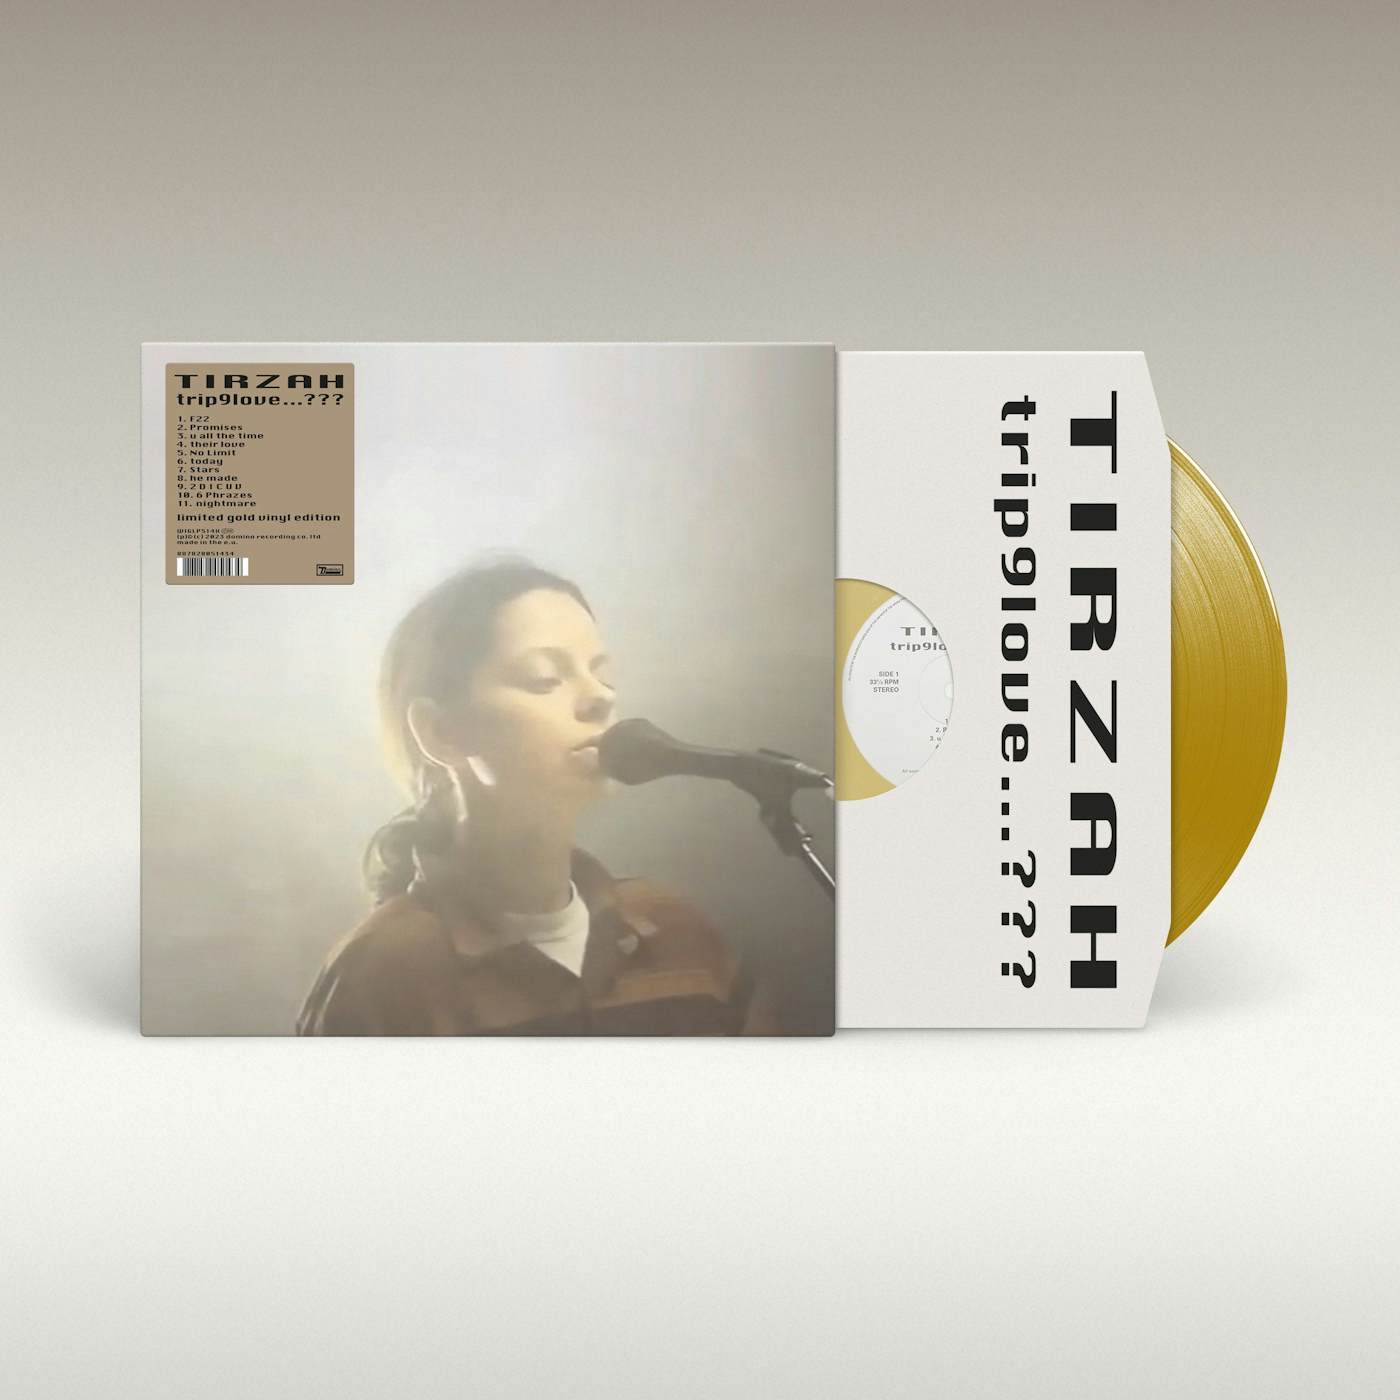 Tirzah trip9love...?? Gold Vinyl LP